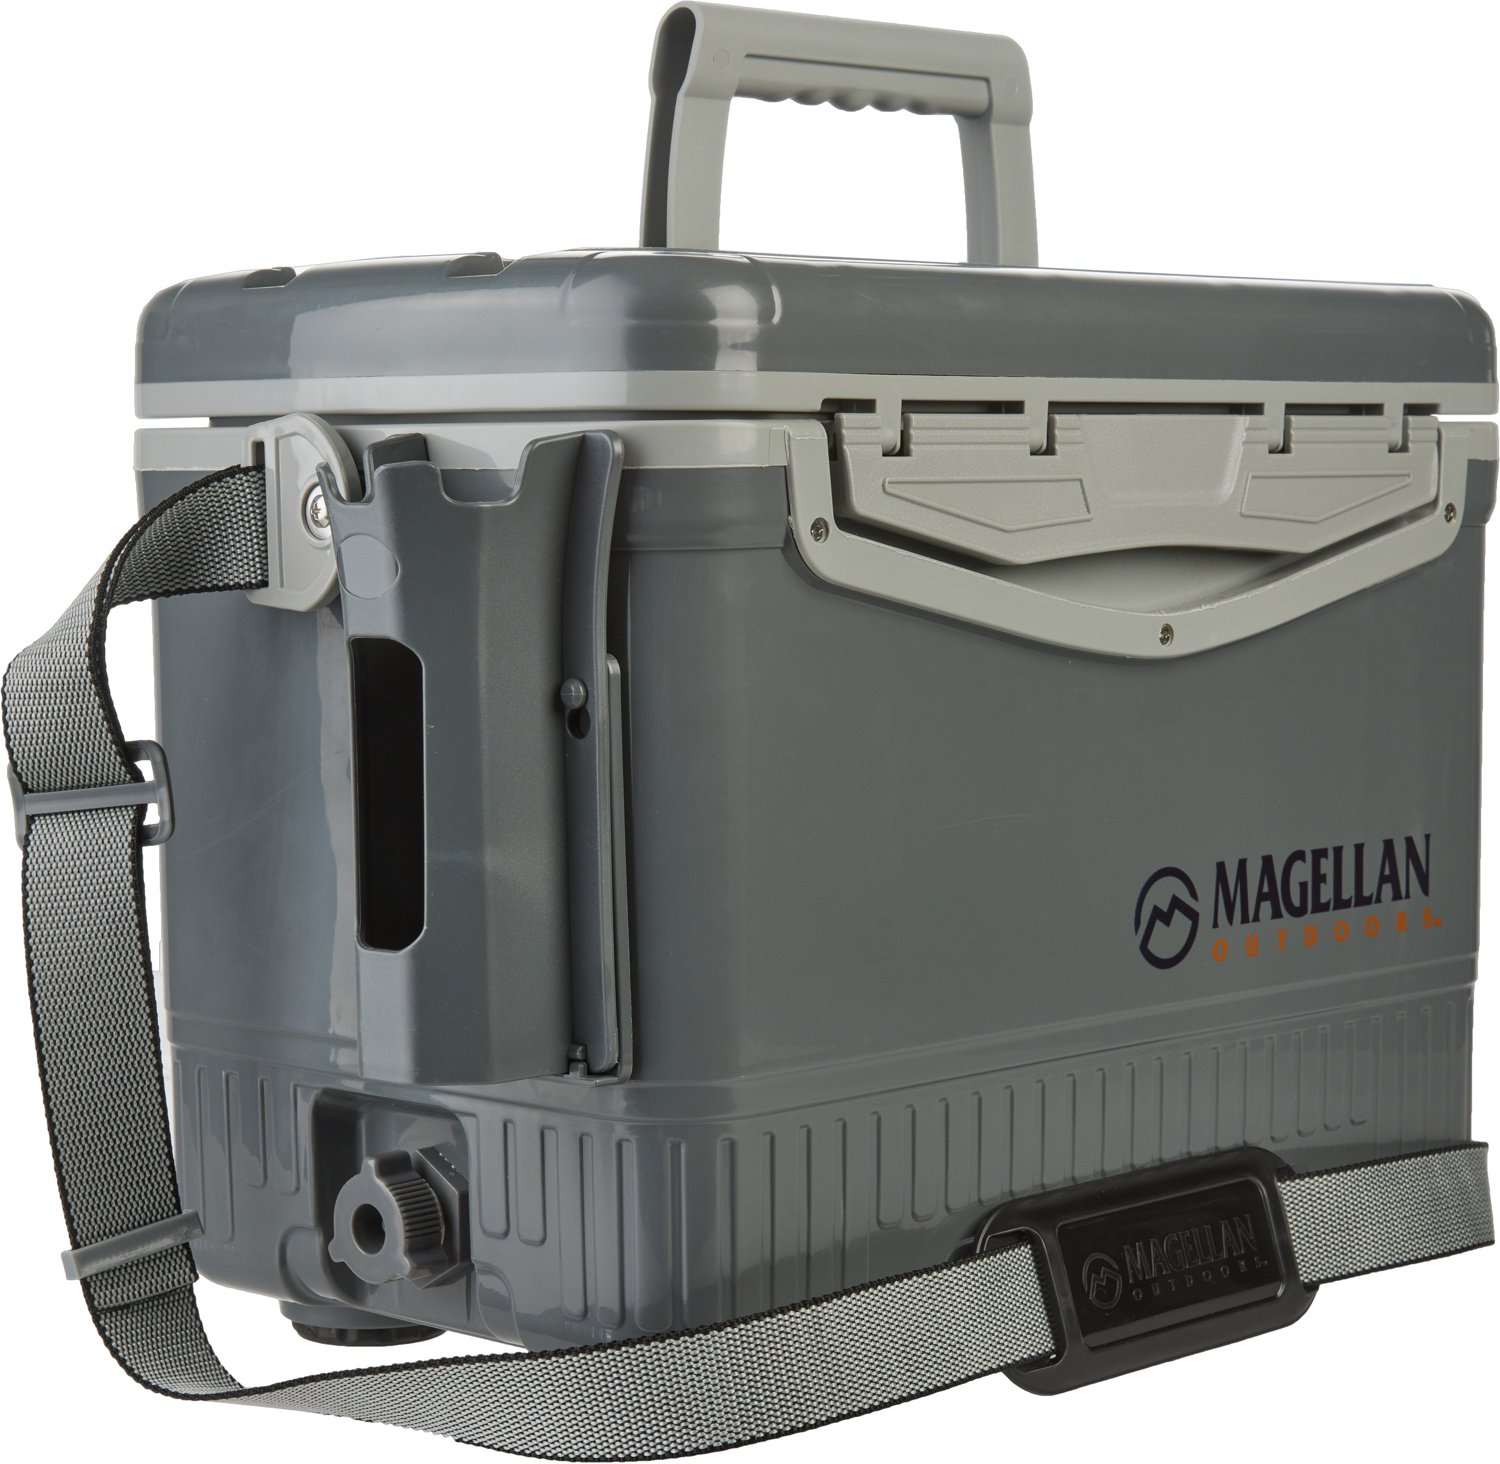 Magellan Outdoors 13 qt Dry Box